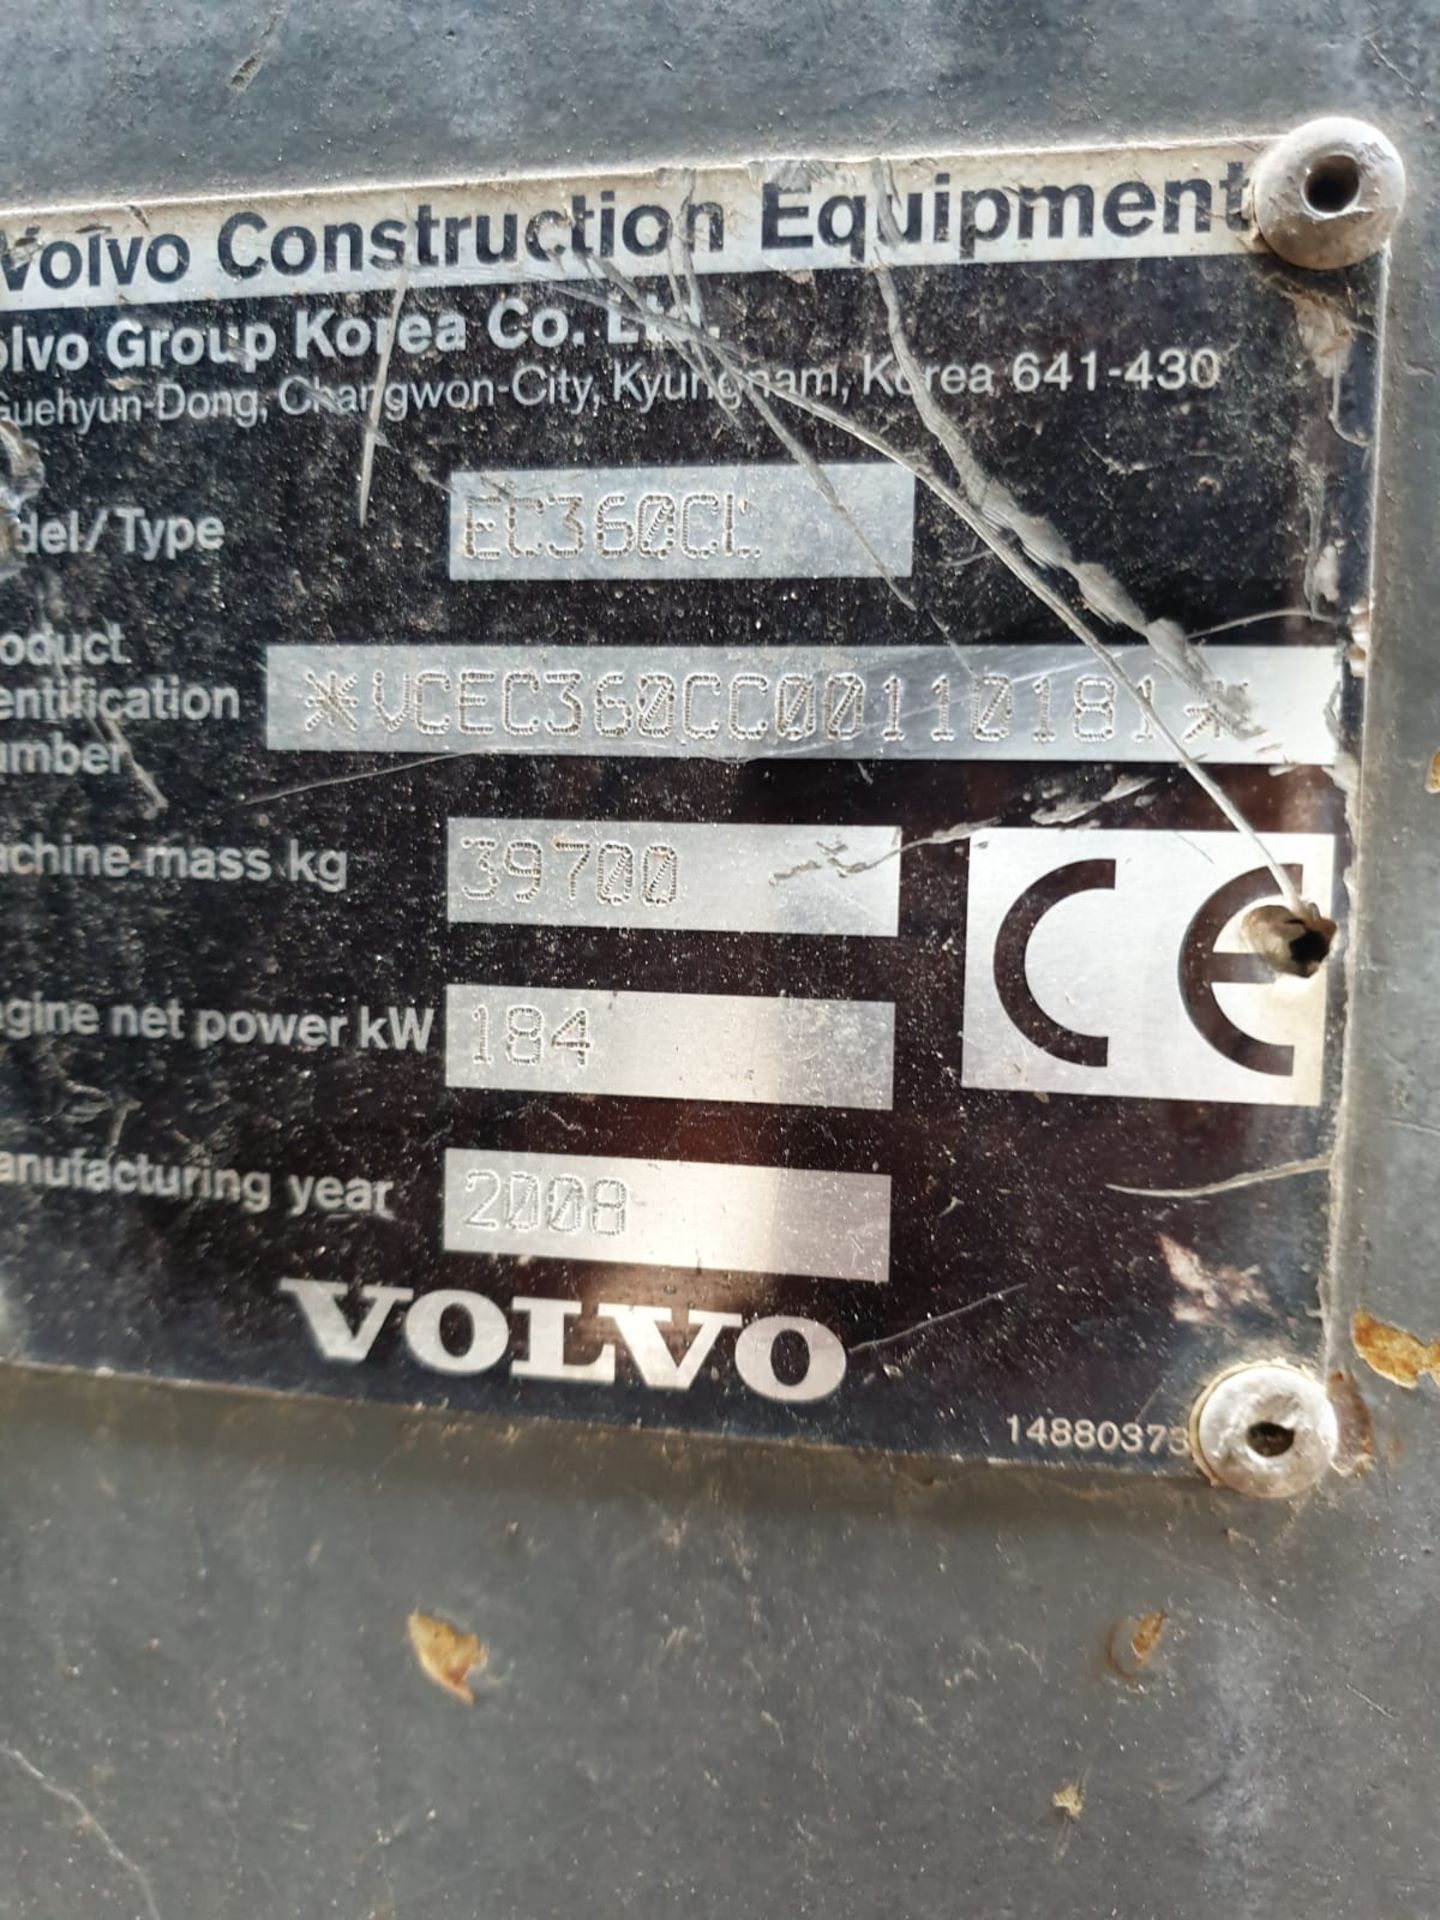 Volvo EC360 CLC Excavator - Image 27 of 30